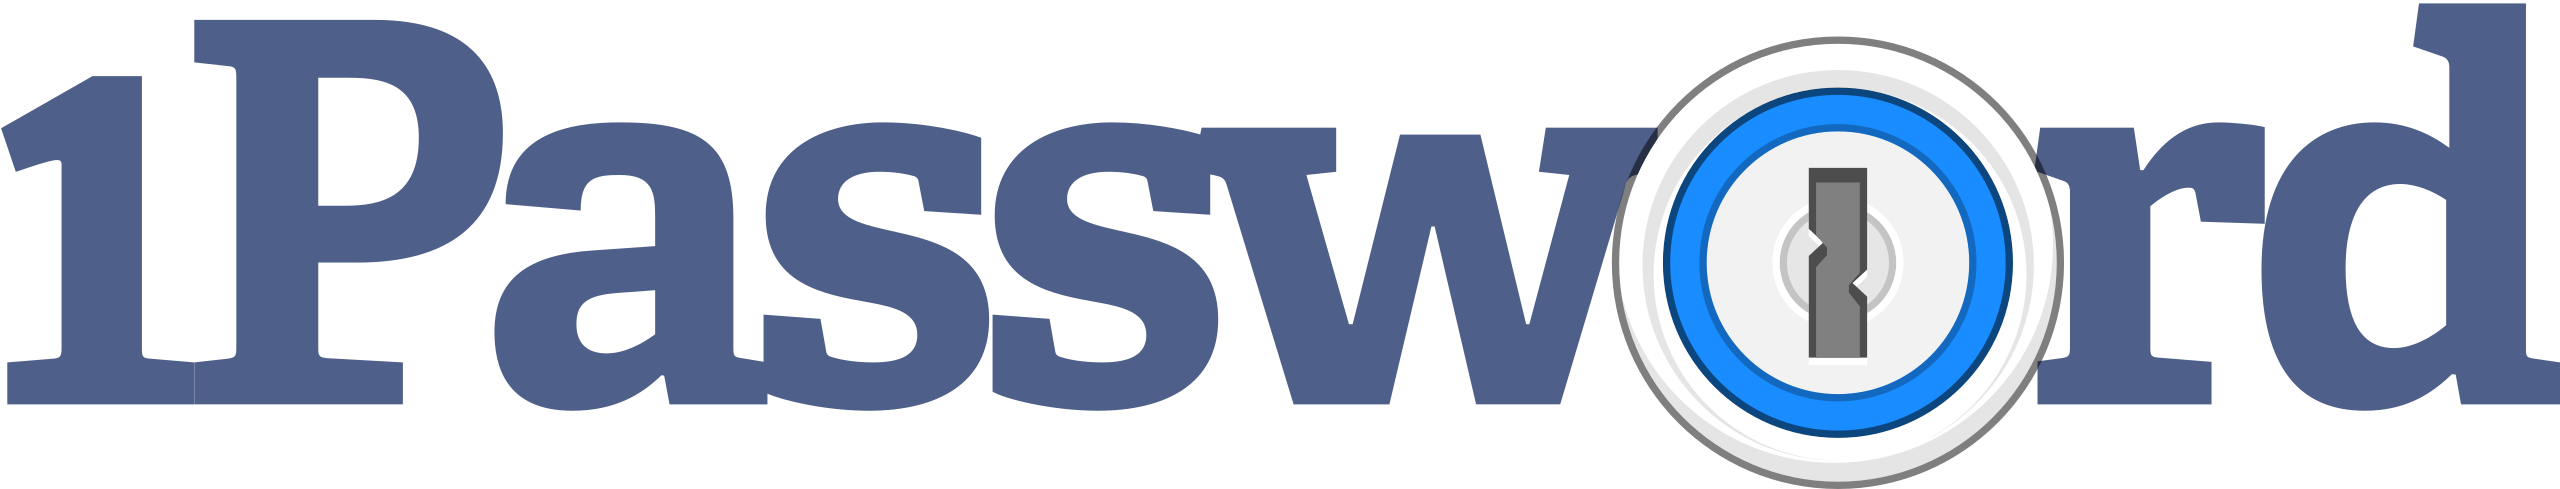 1Password official logo